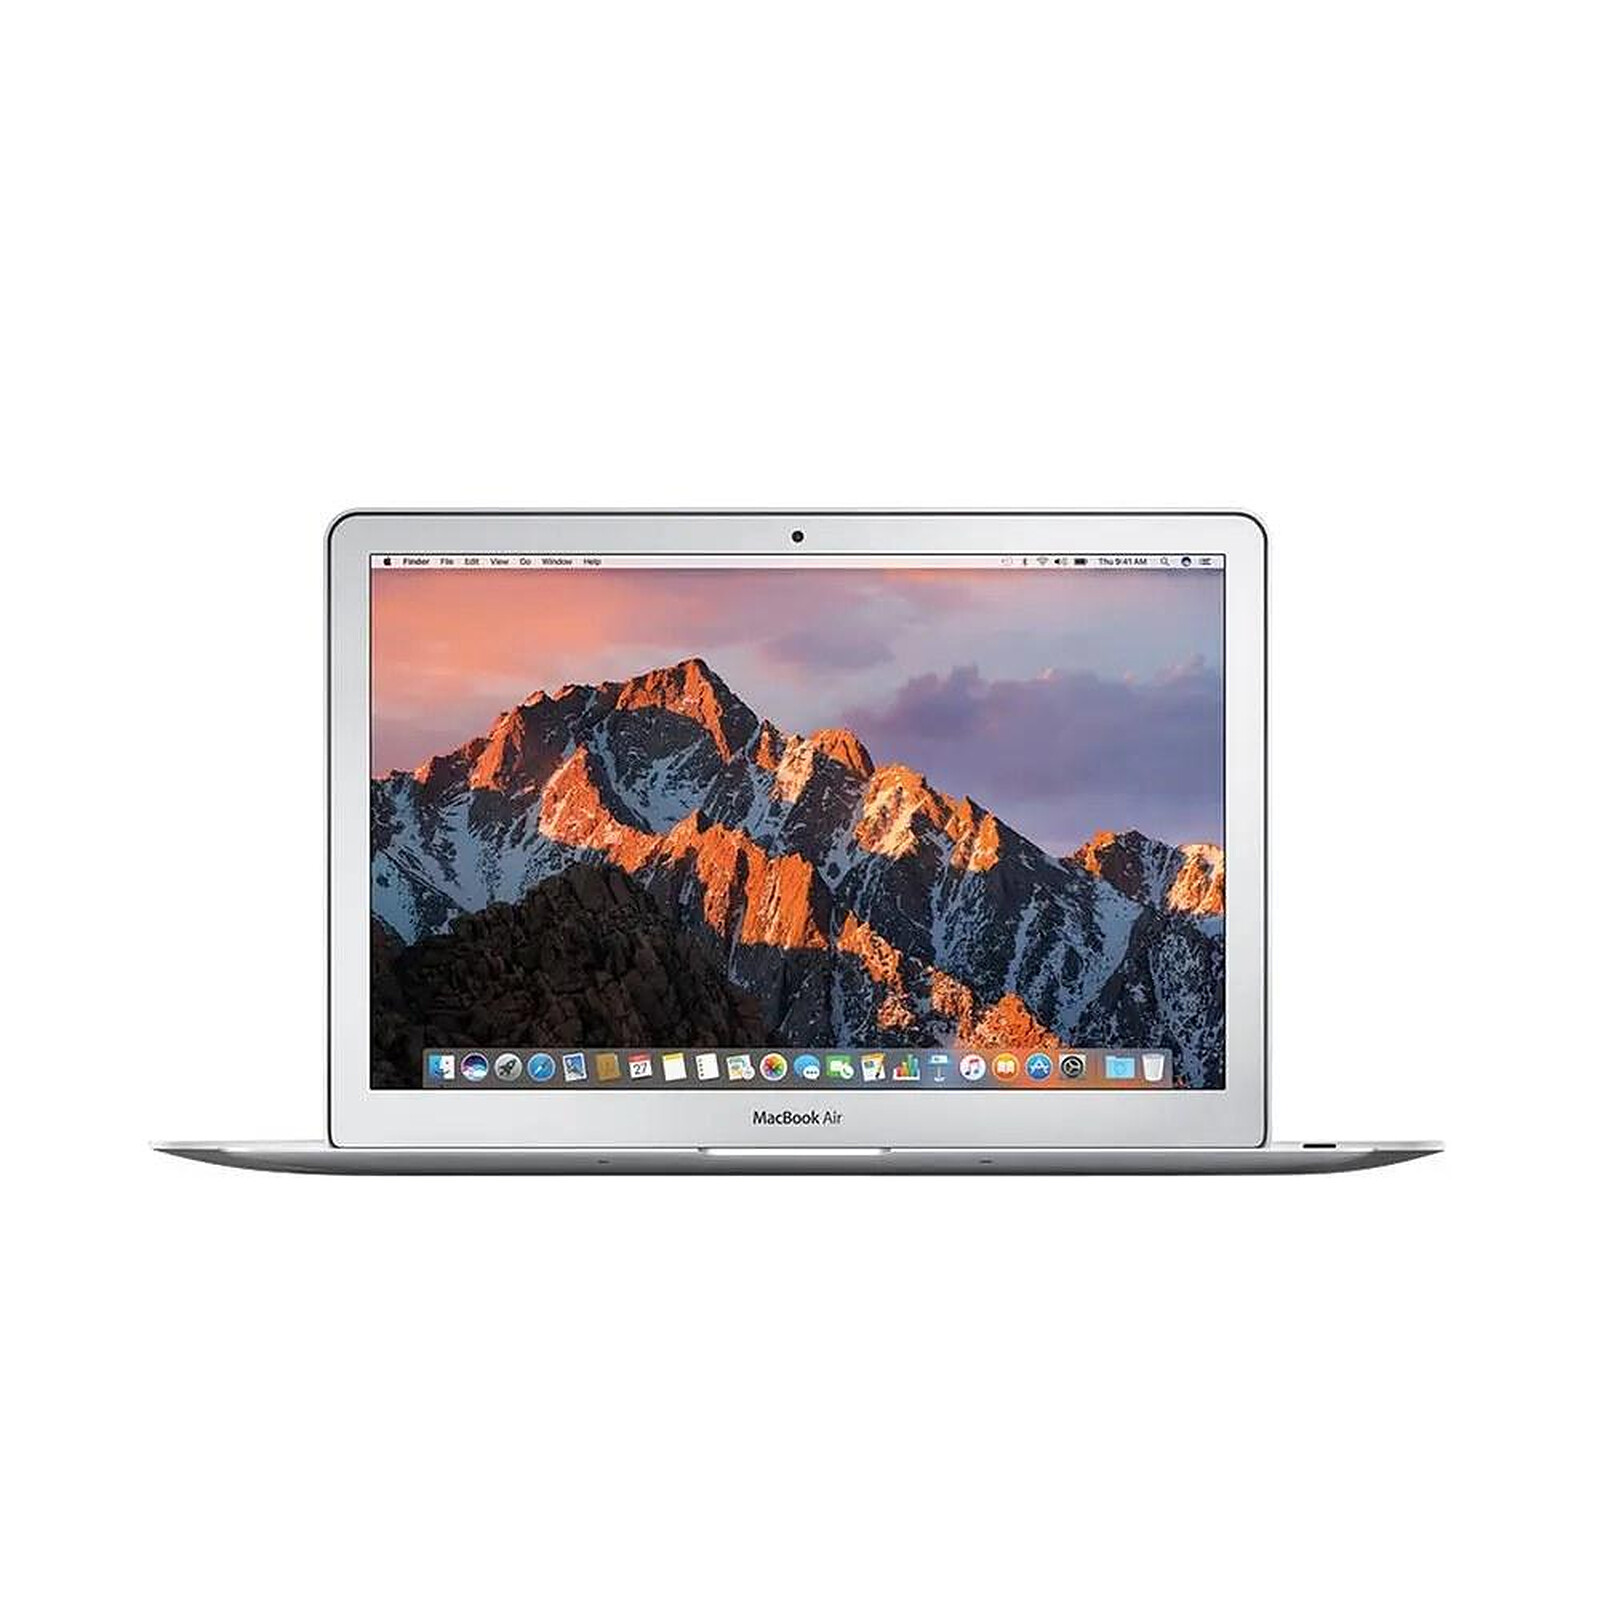 Test du MacBook Air SSD